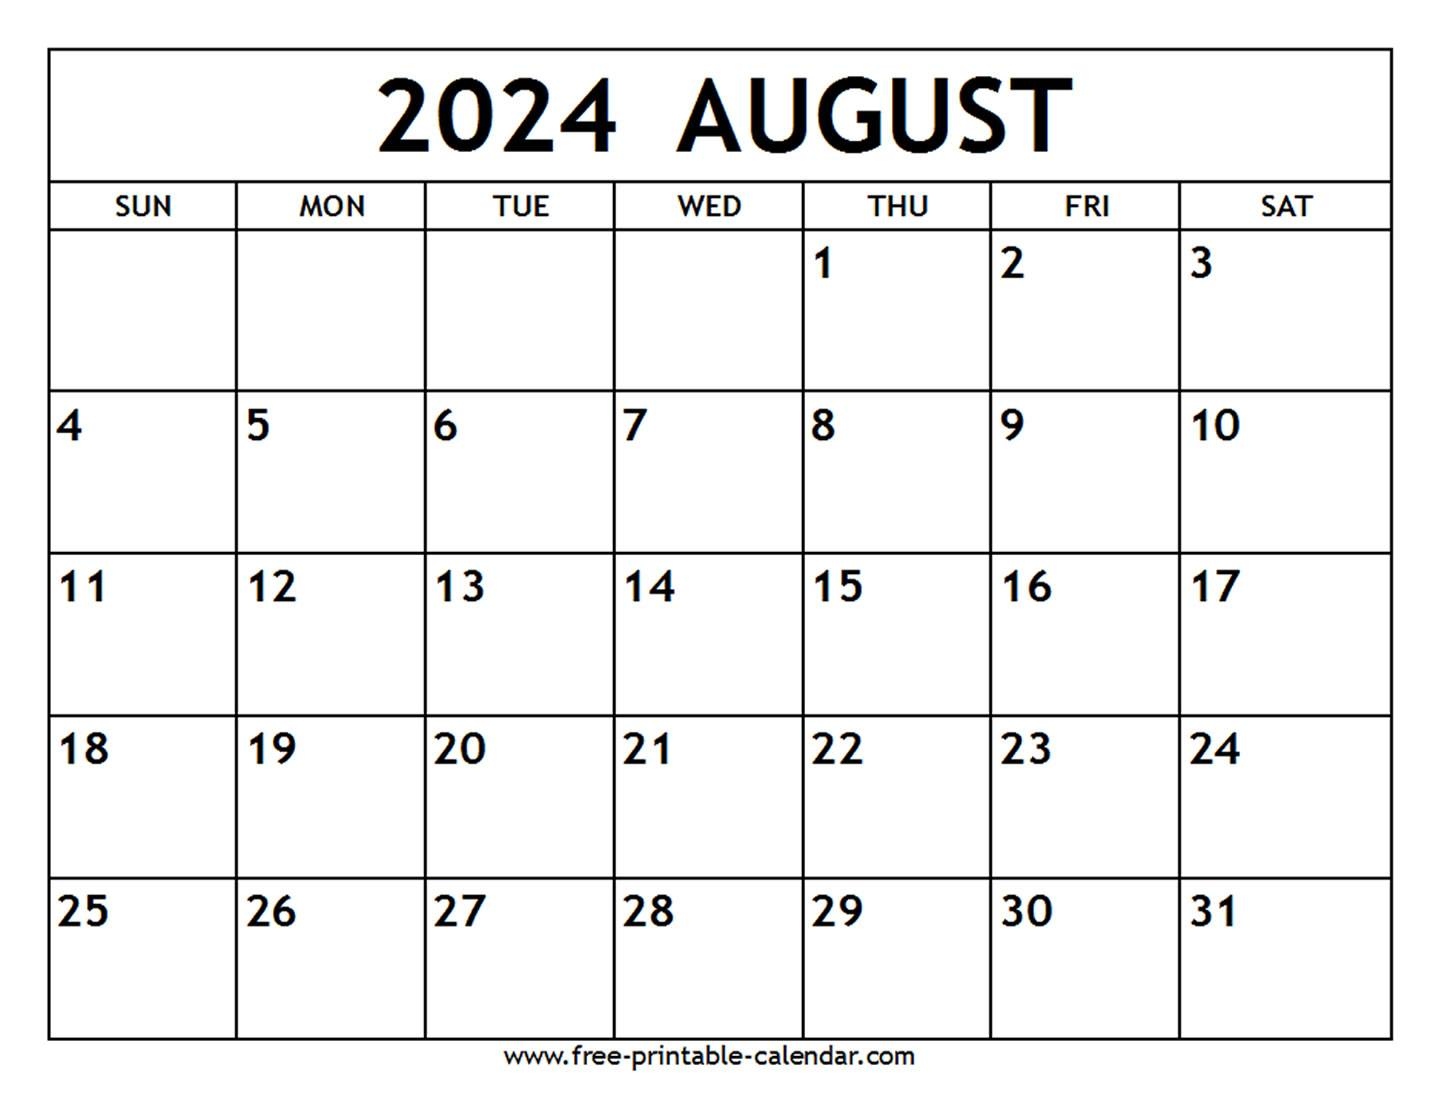 August 2024 Calendar - Free-Printable-Calendar intended for Free Printable August 2024 Calendar With Notes